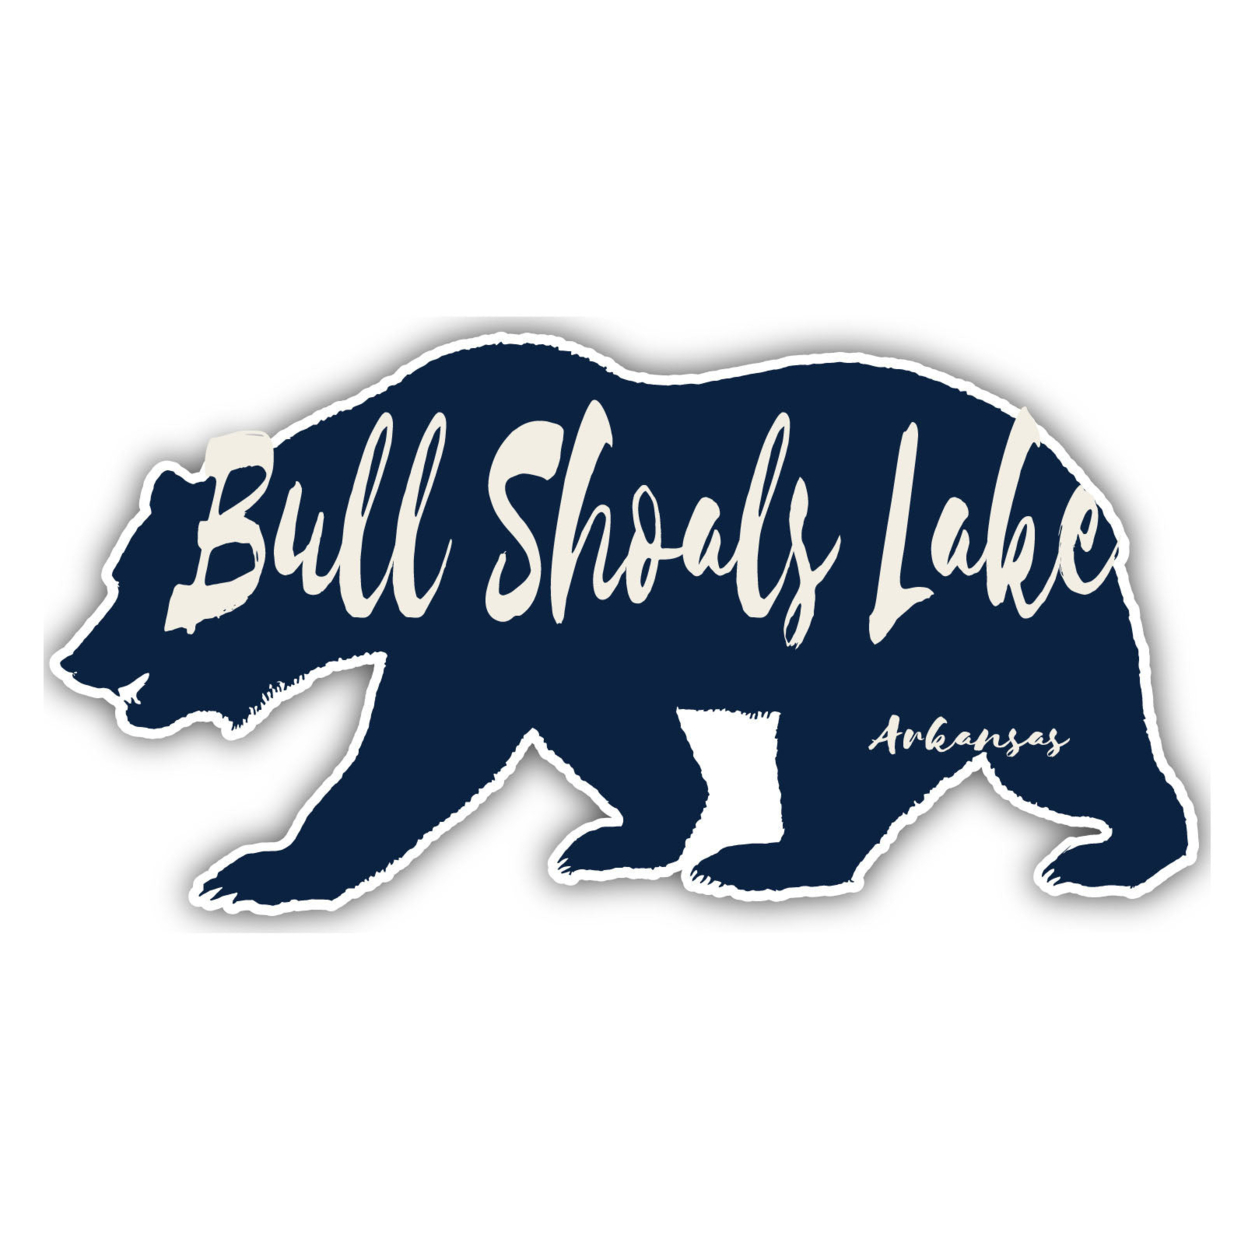 Bull Shoals Lake Arkansas Souvenir Decorative Stickers (Choose Theme And Size) - 4-Pack, 2-Inch, Bear